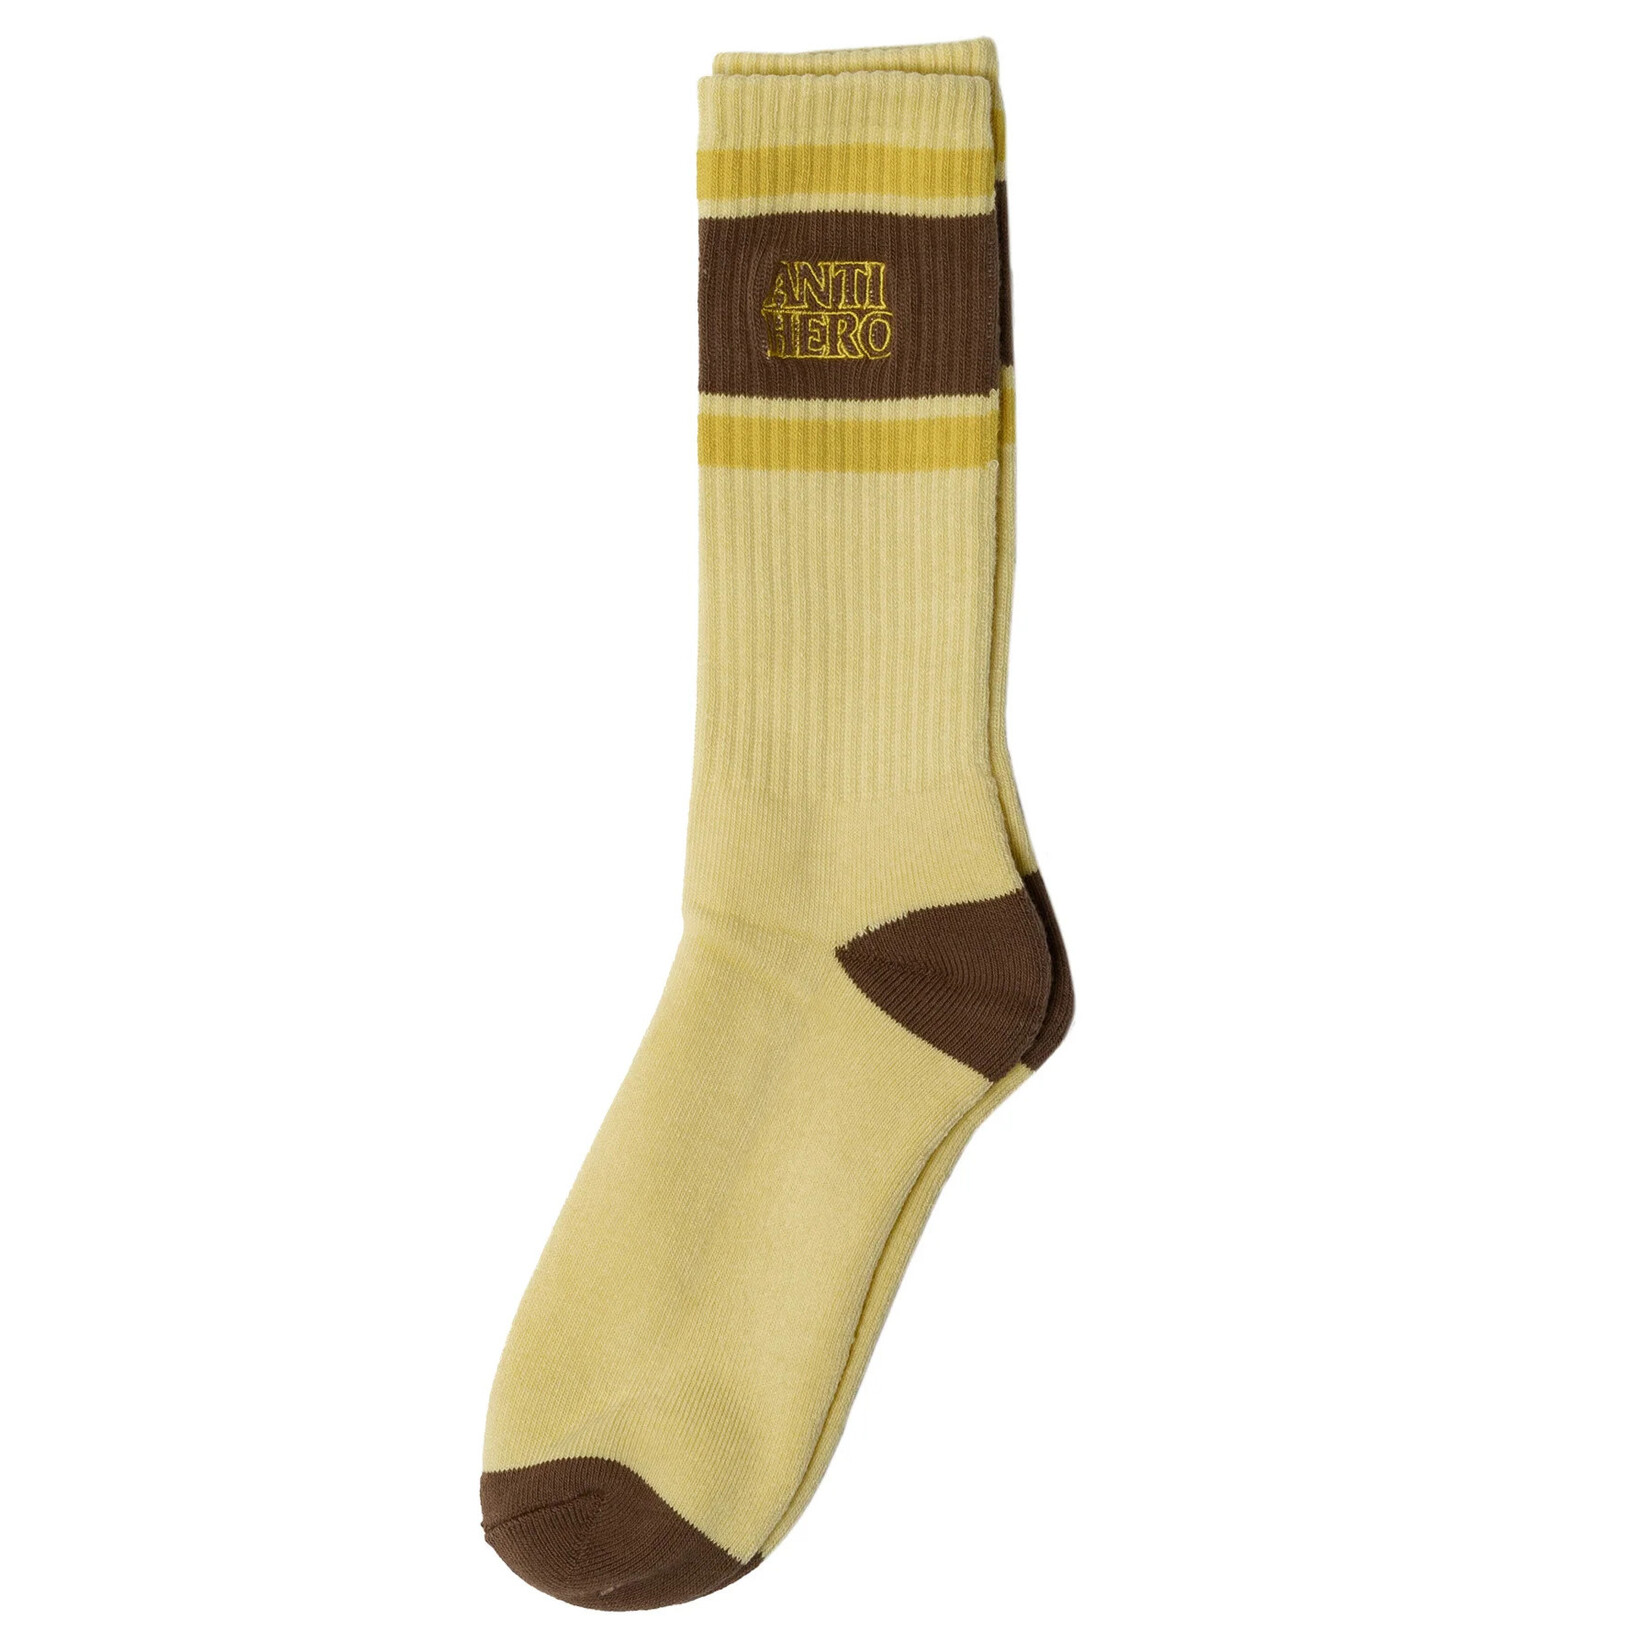 https://cdn.shoplightspeed.com/shops/613105/files/57666200/1652x1652x1/anti-hero-anti-hero-black-hero-outline-socks-cream.jpg